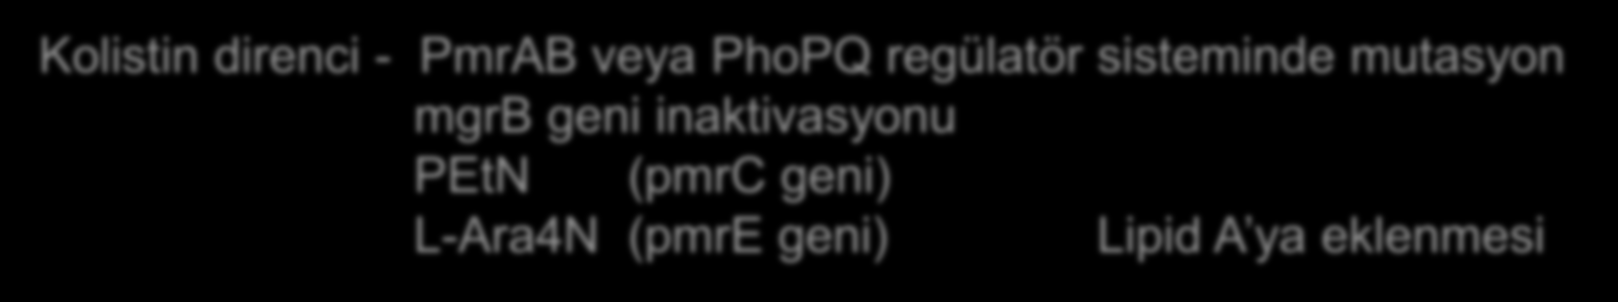 geni inaktivasyonu PEtN (pmrc geni)